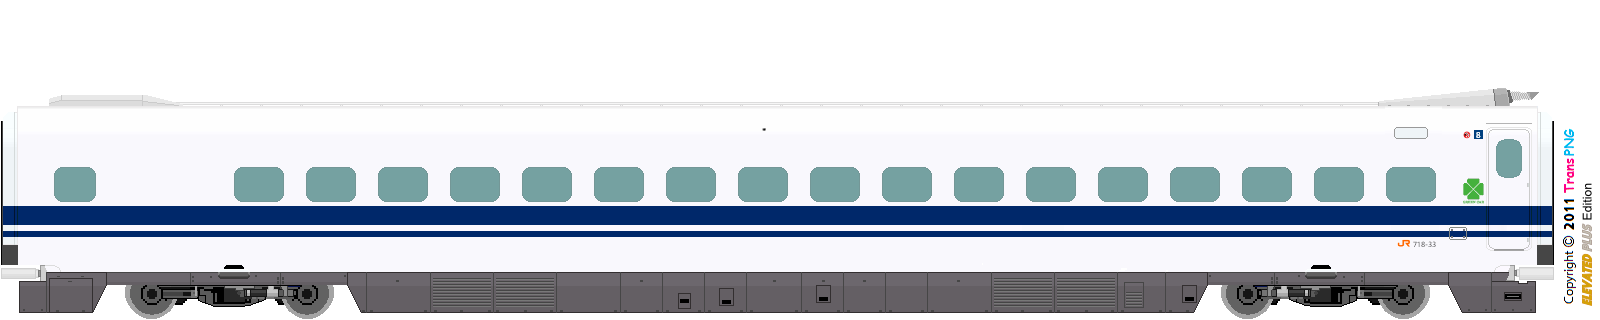 9010 - [9010] Central Japan Railway 52287586068_0ea54ba05e_o